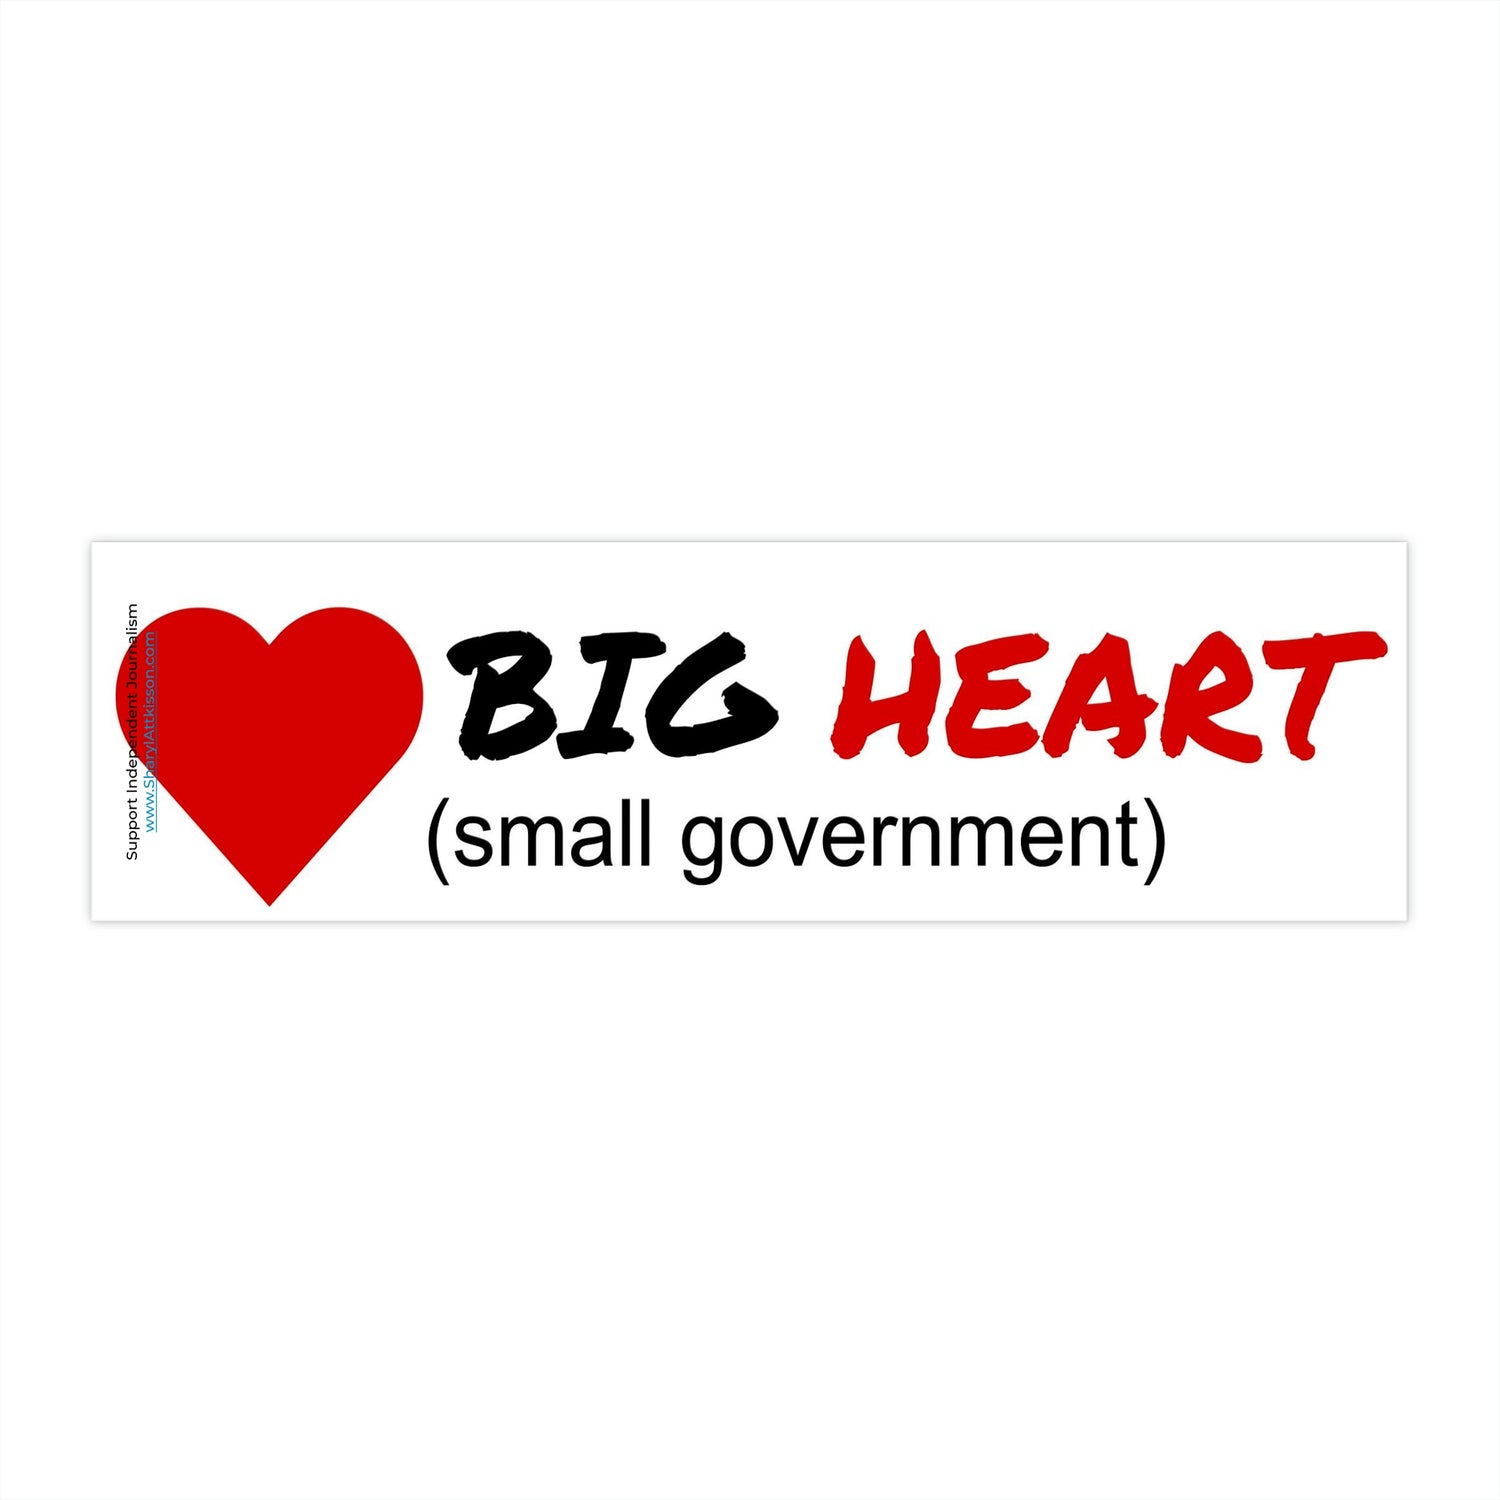 'Big Heart (small government)'